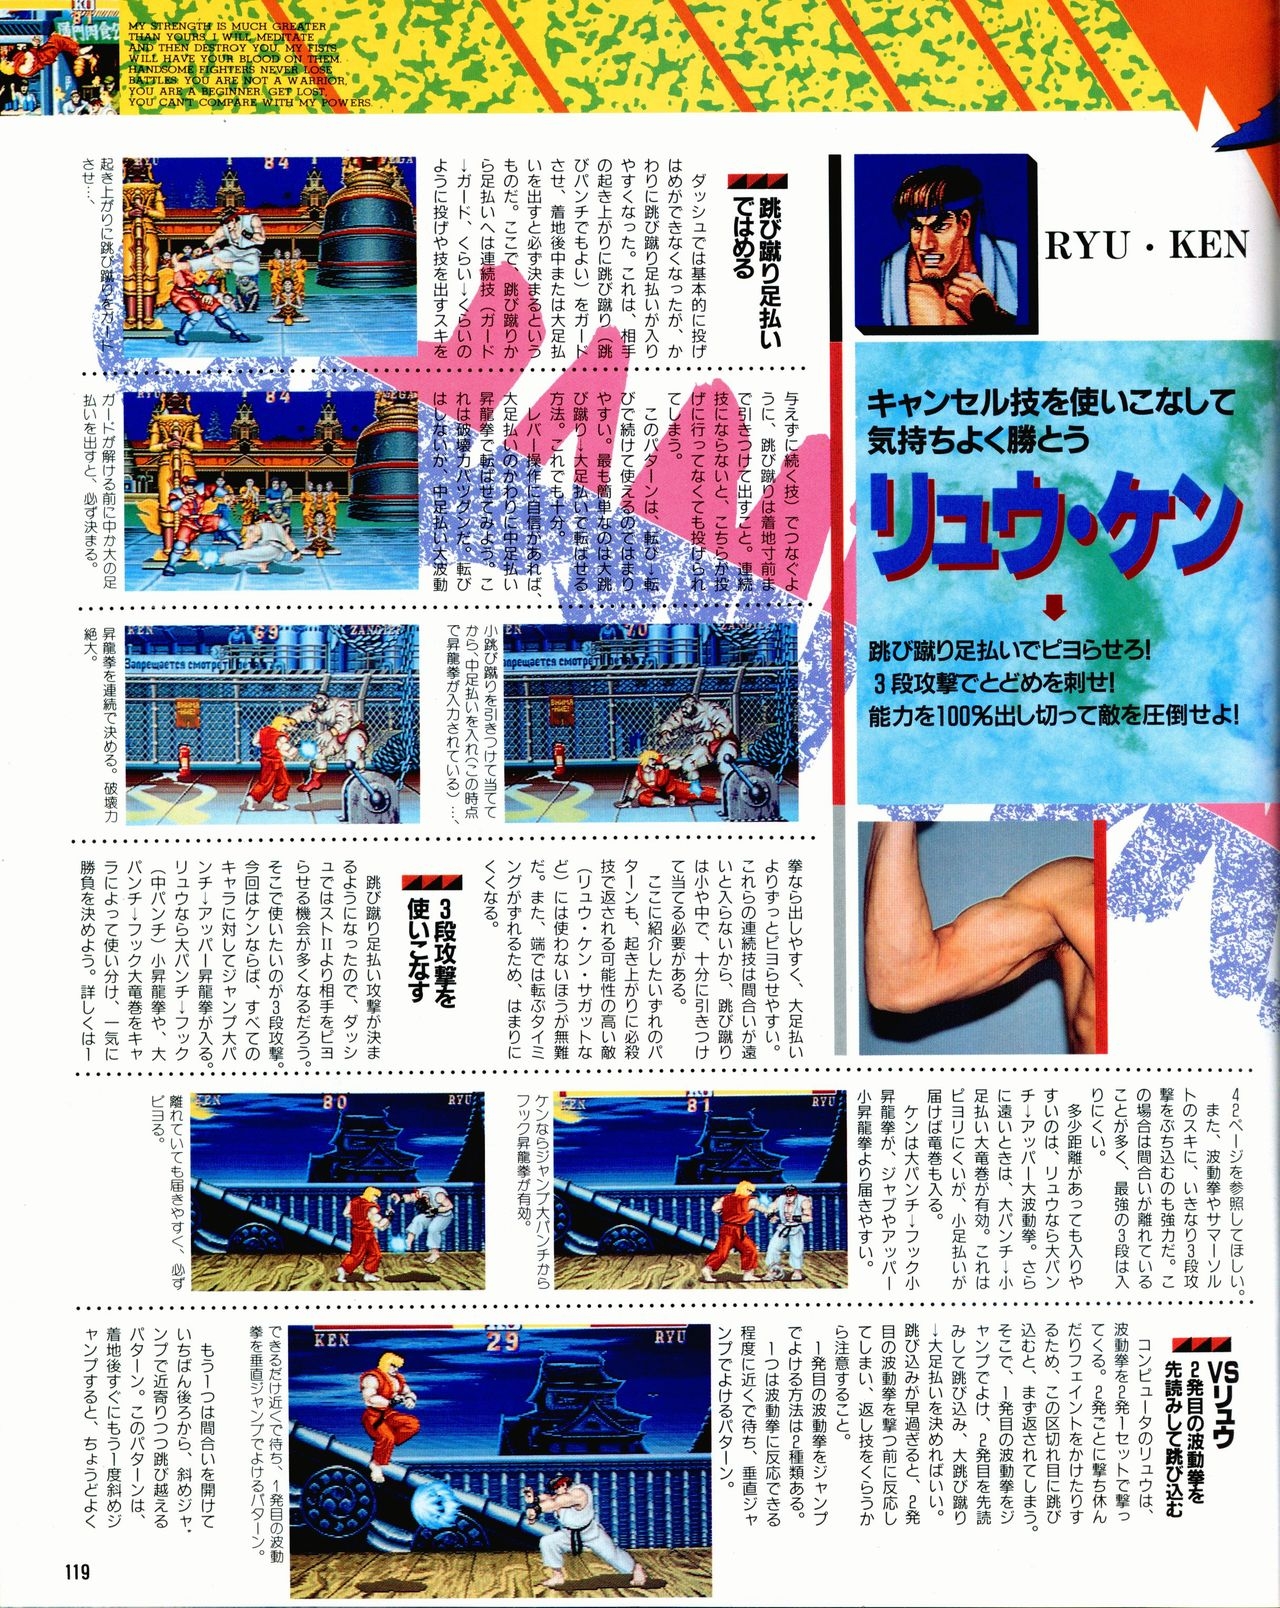 Street Fighter II Dash - Gamest special issue 77 120